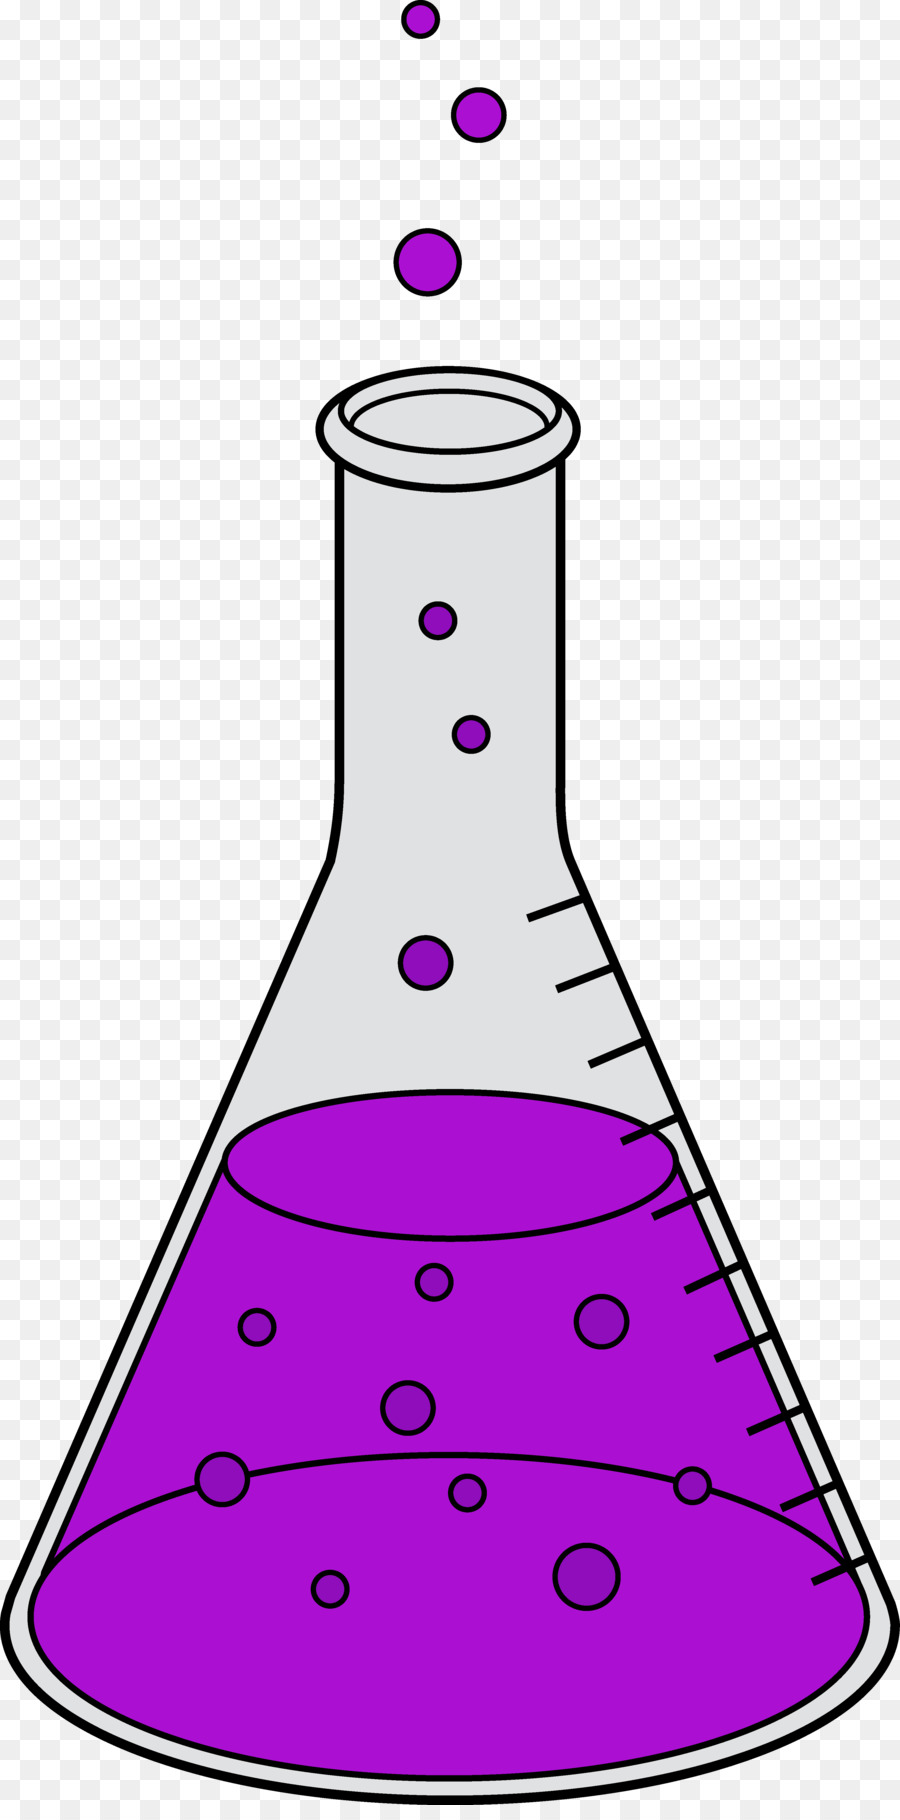 Beaker Laboratory flask Science Clip art - Experimenting Cliparts png download - 3566*7152 - Free Transparent Beaker png Download.